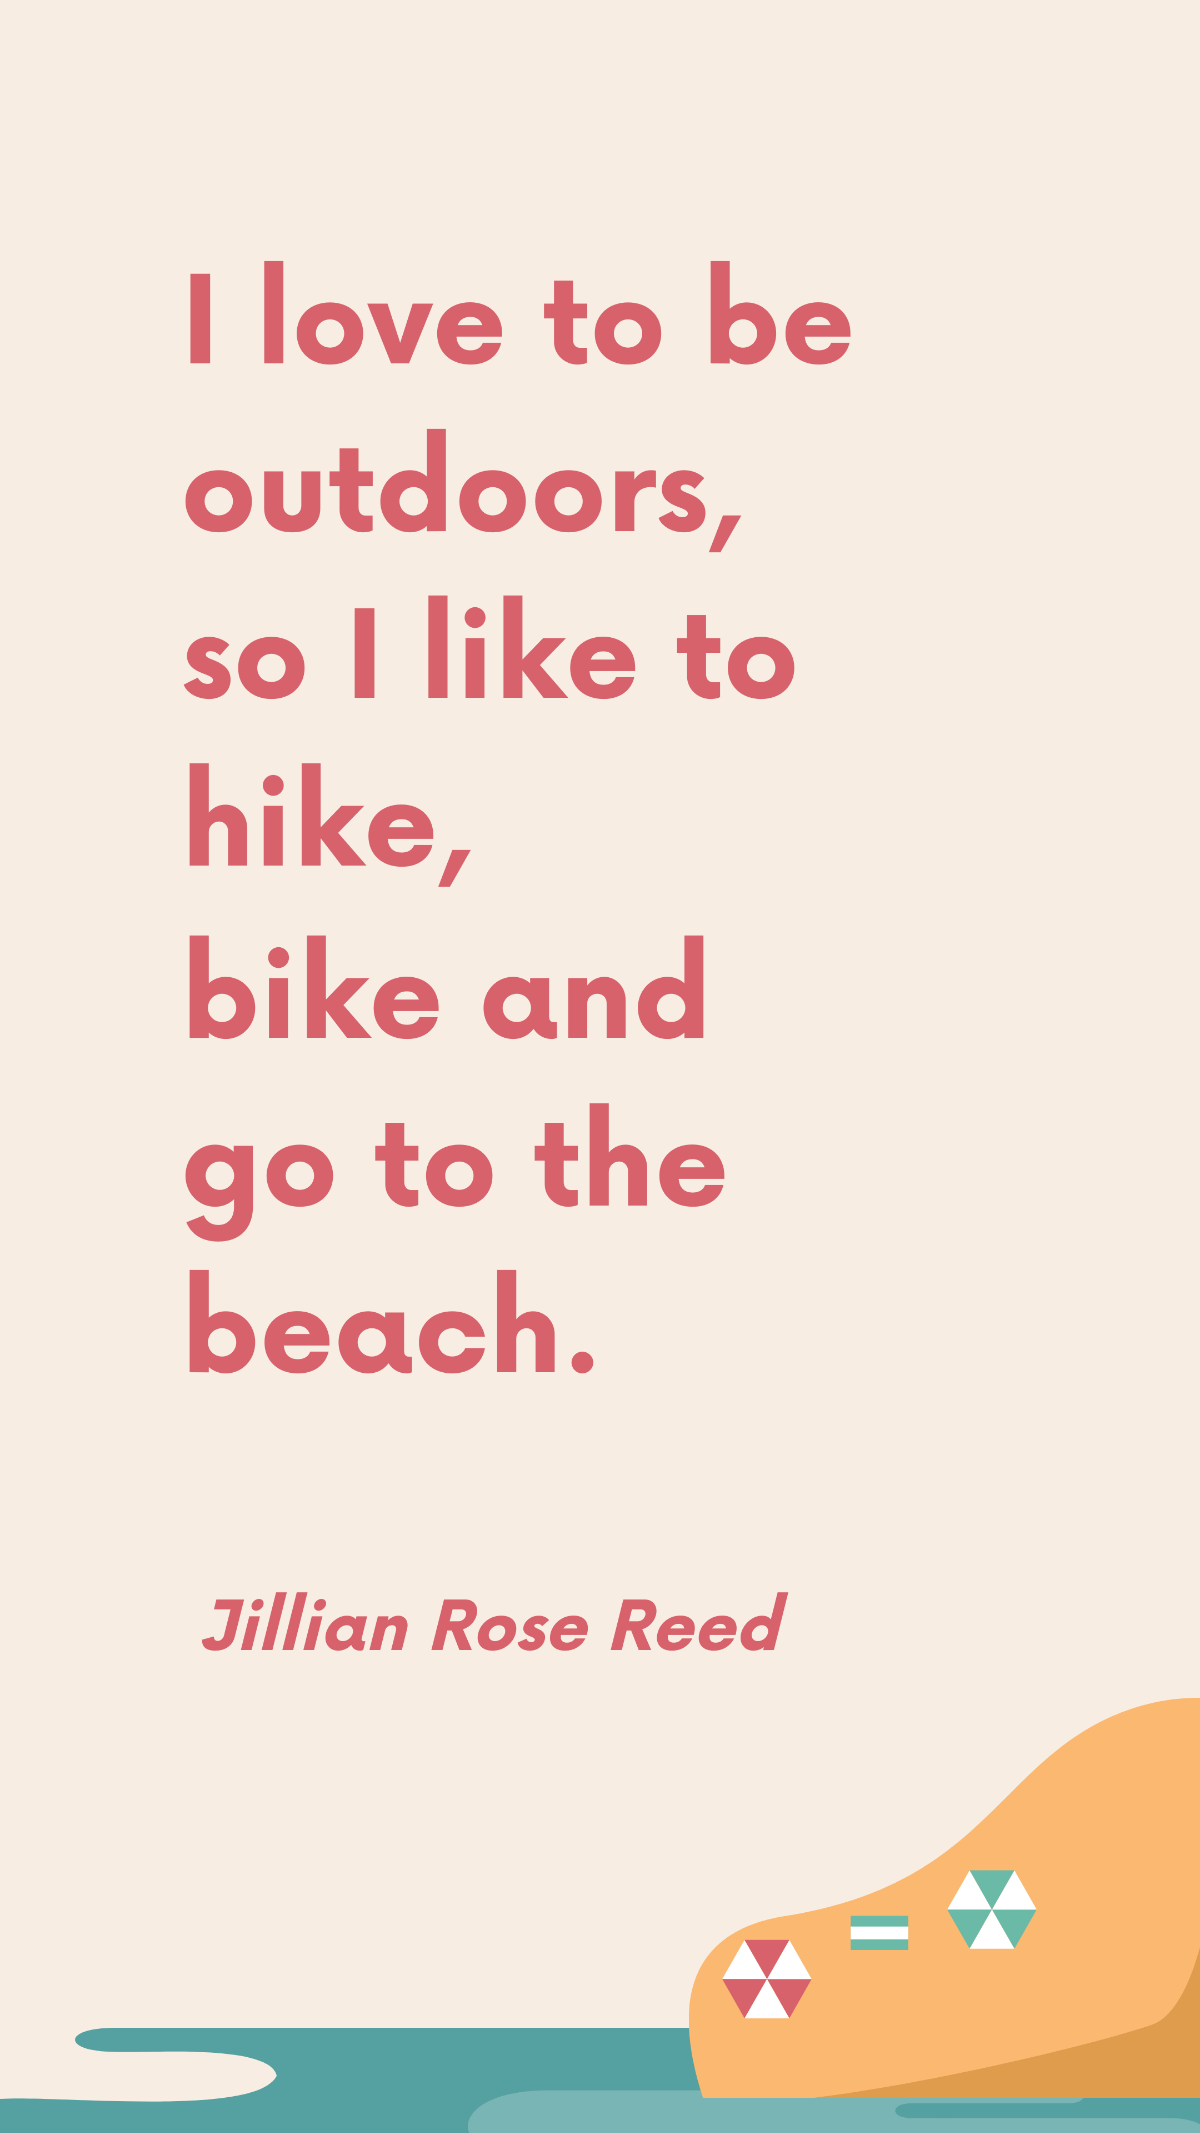 Jillian Rose Reed - I love to be outdoors, so I like to hike, bike and go to the beach. Template